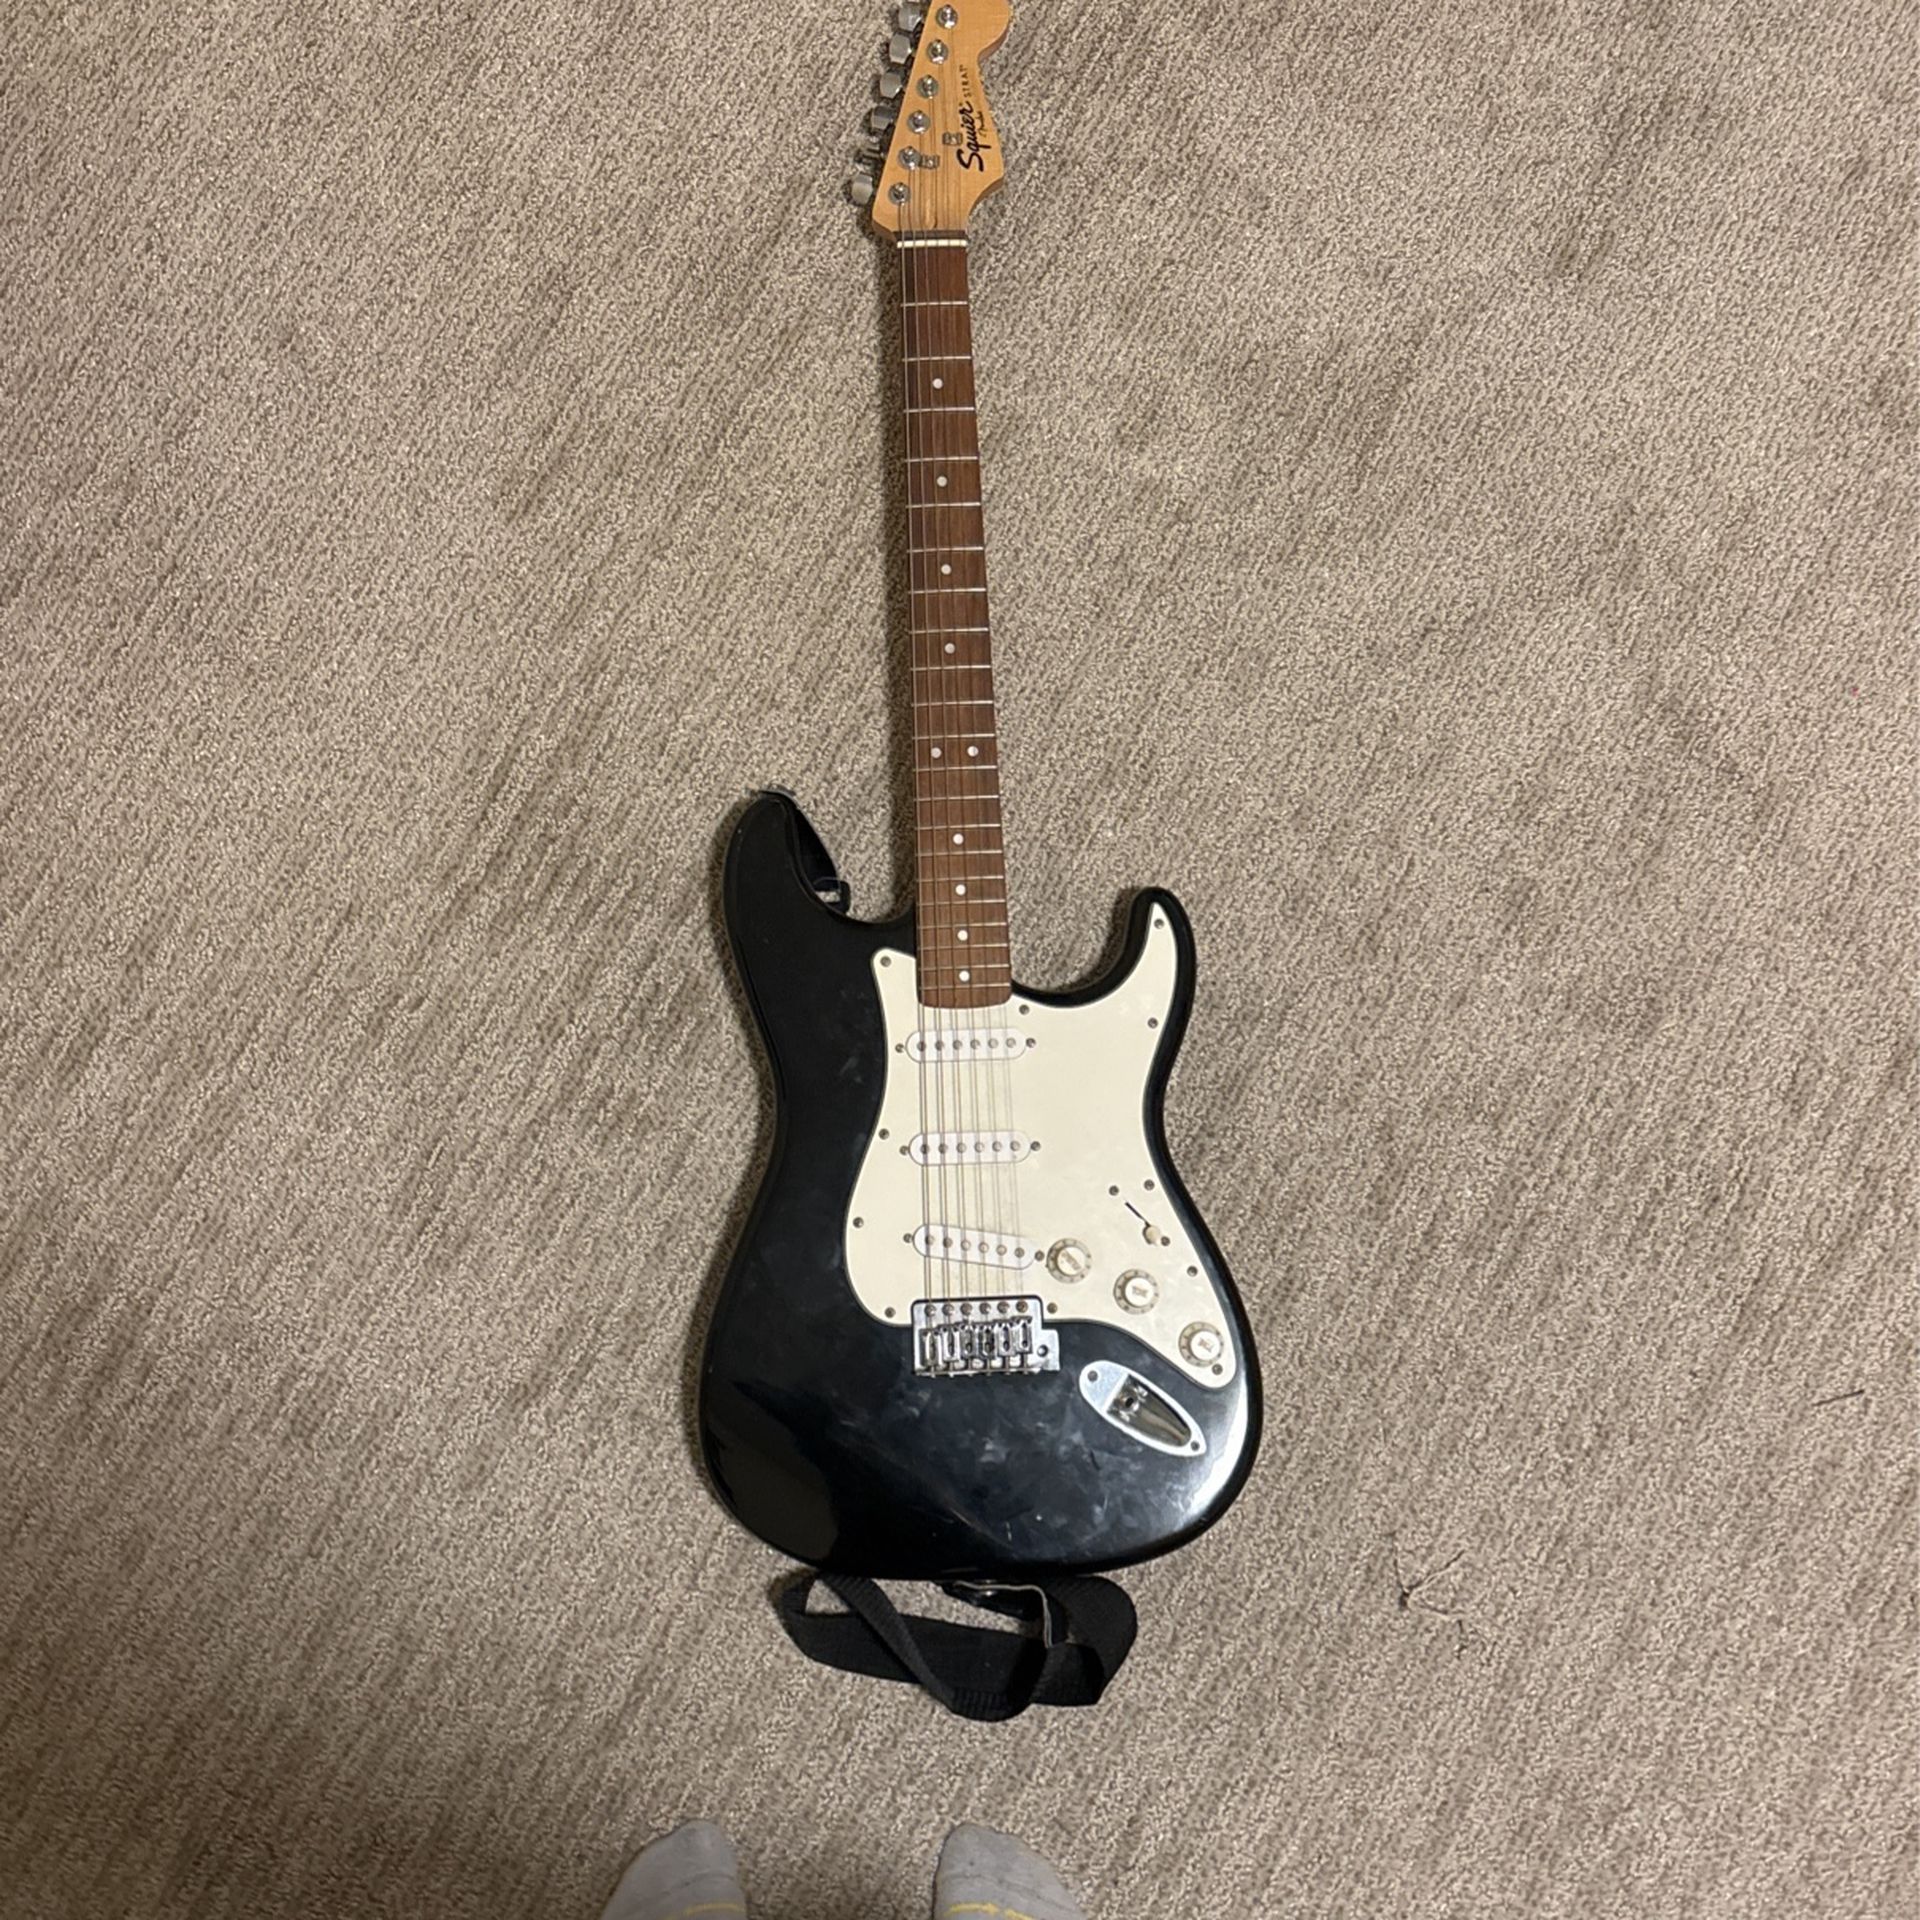 Squier Fender Strat Guitar